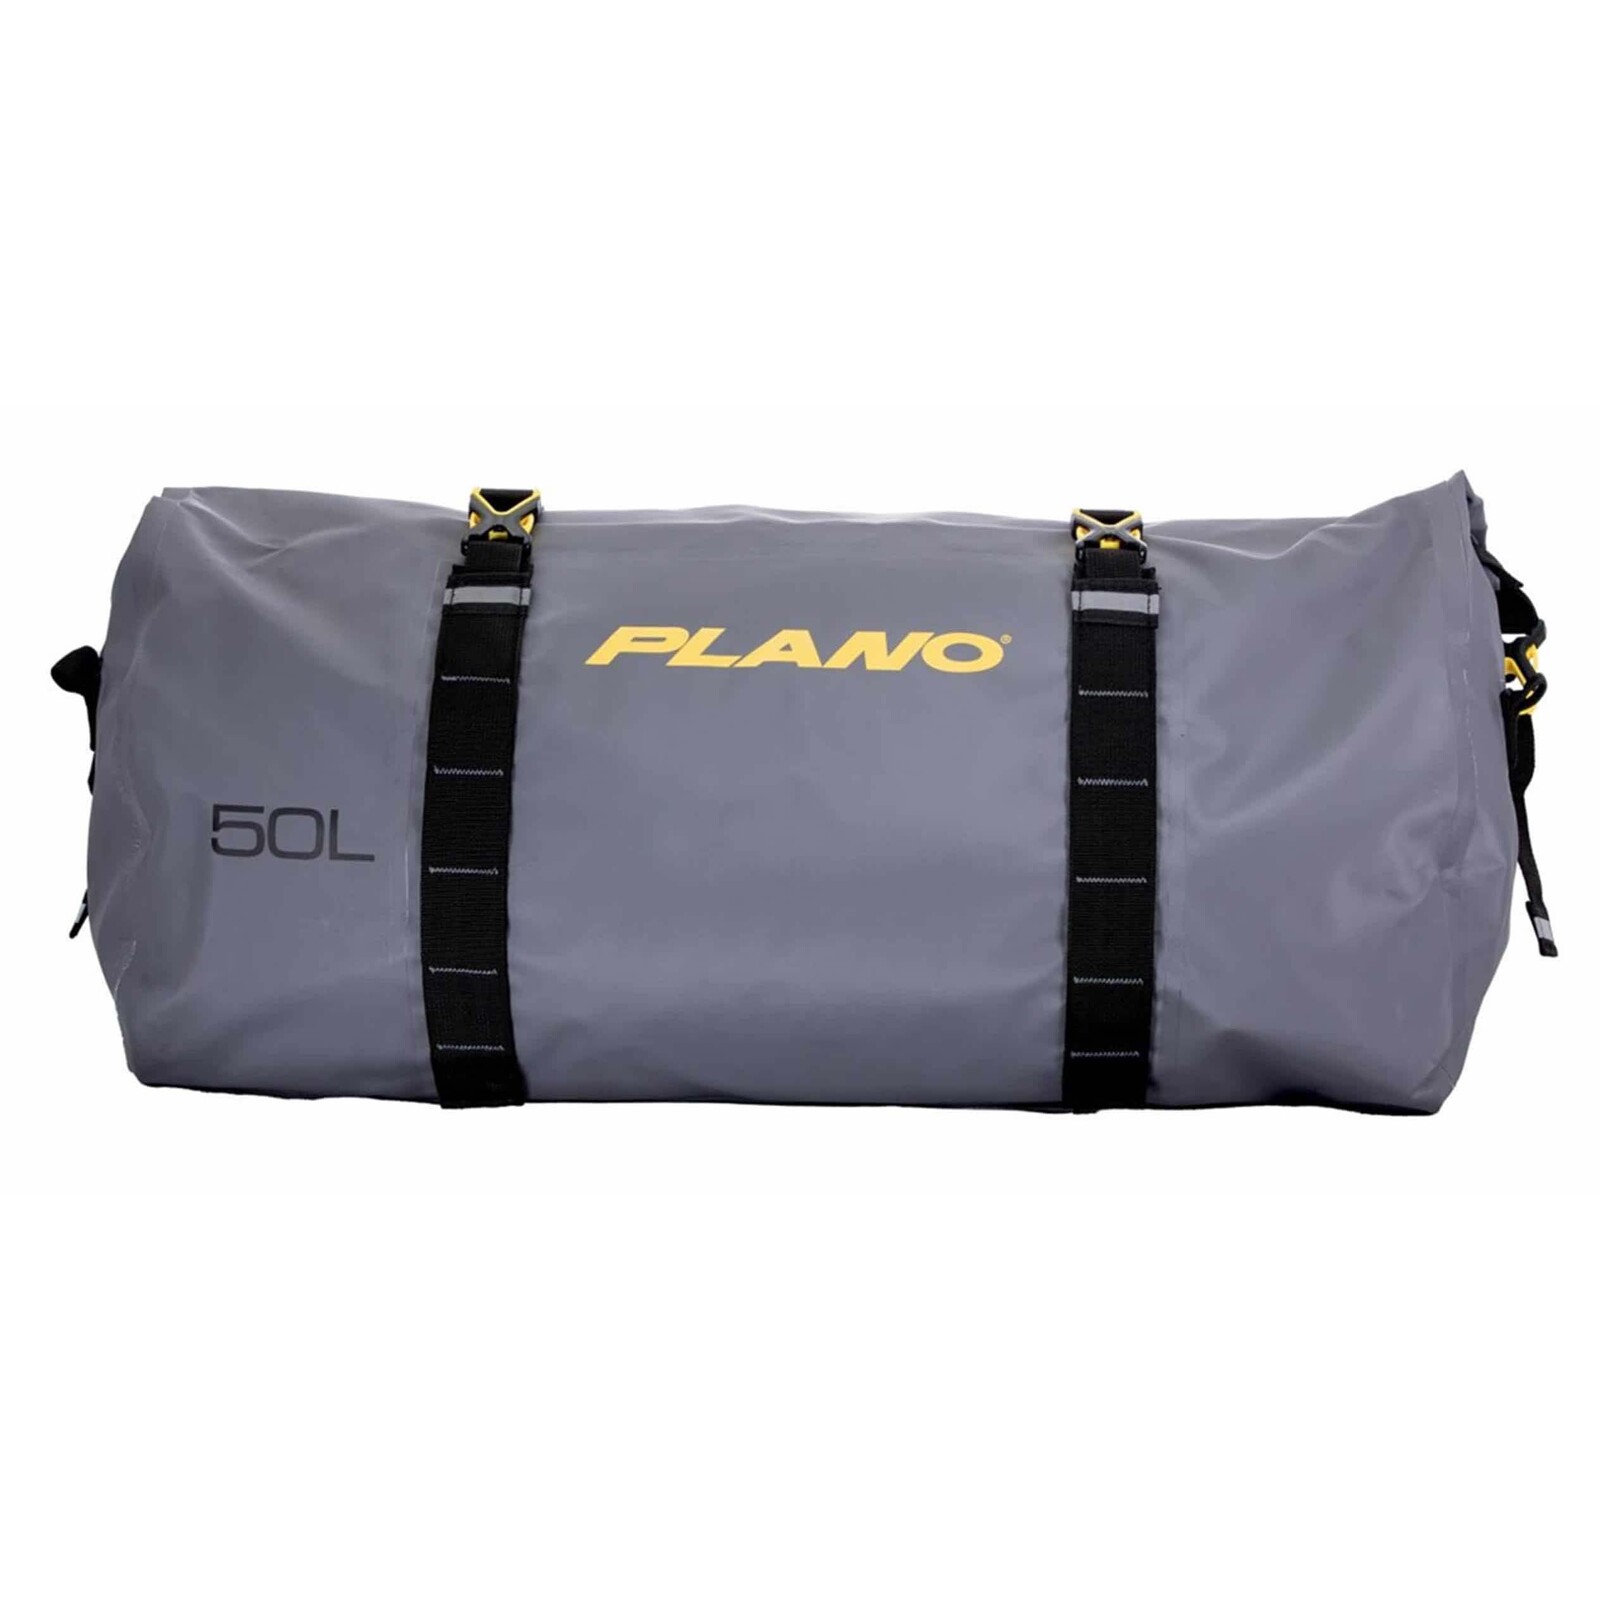 Plano Waterproof Duffle Bag 50l 